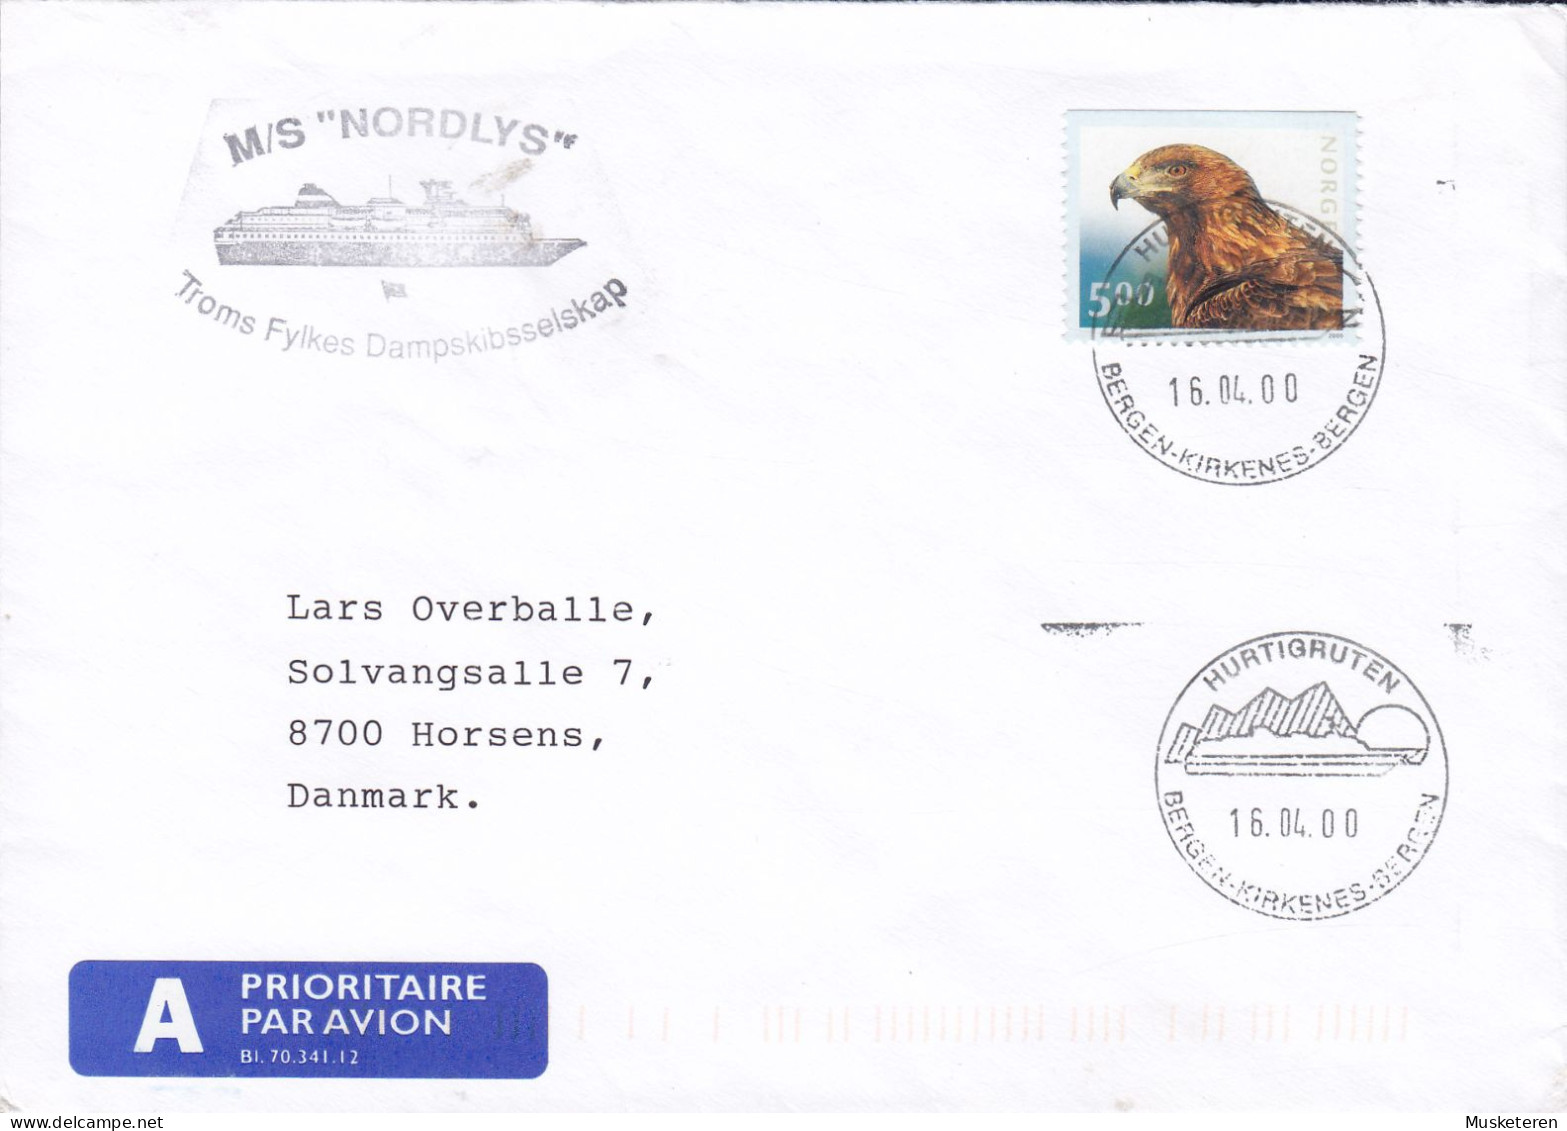 Norway A PRIORITAIRE Label M/S 'NORDLYS' Troms Fylkes Dampskibsselskab HURTIGRUTEN 2000 Cover Brief Eagle Adler - Lettres & Documents